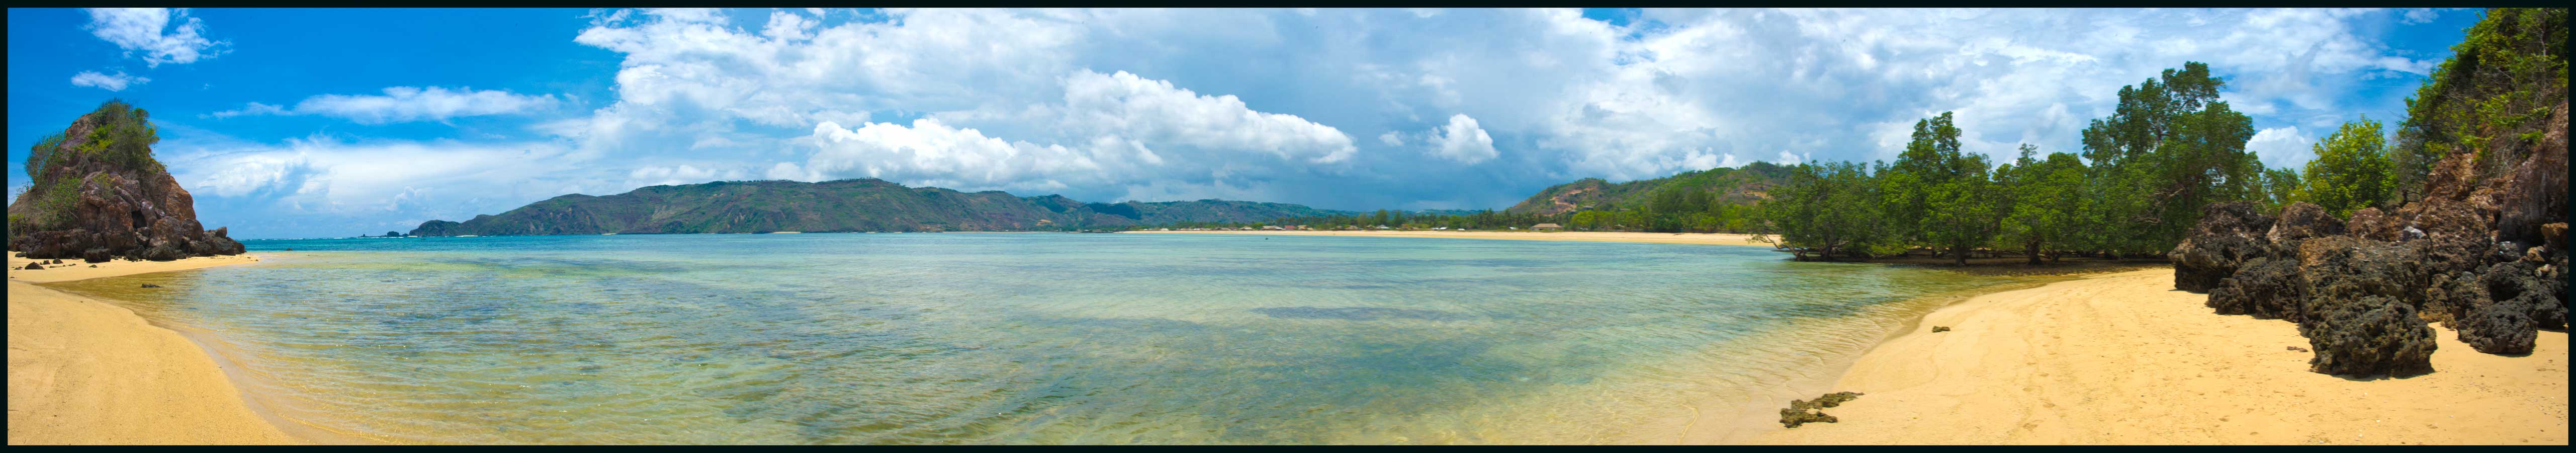 Kuta Beach Panorama By Partoftime